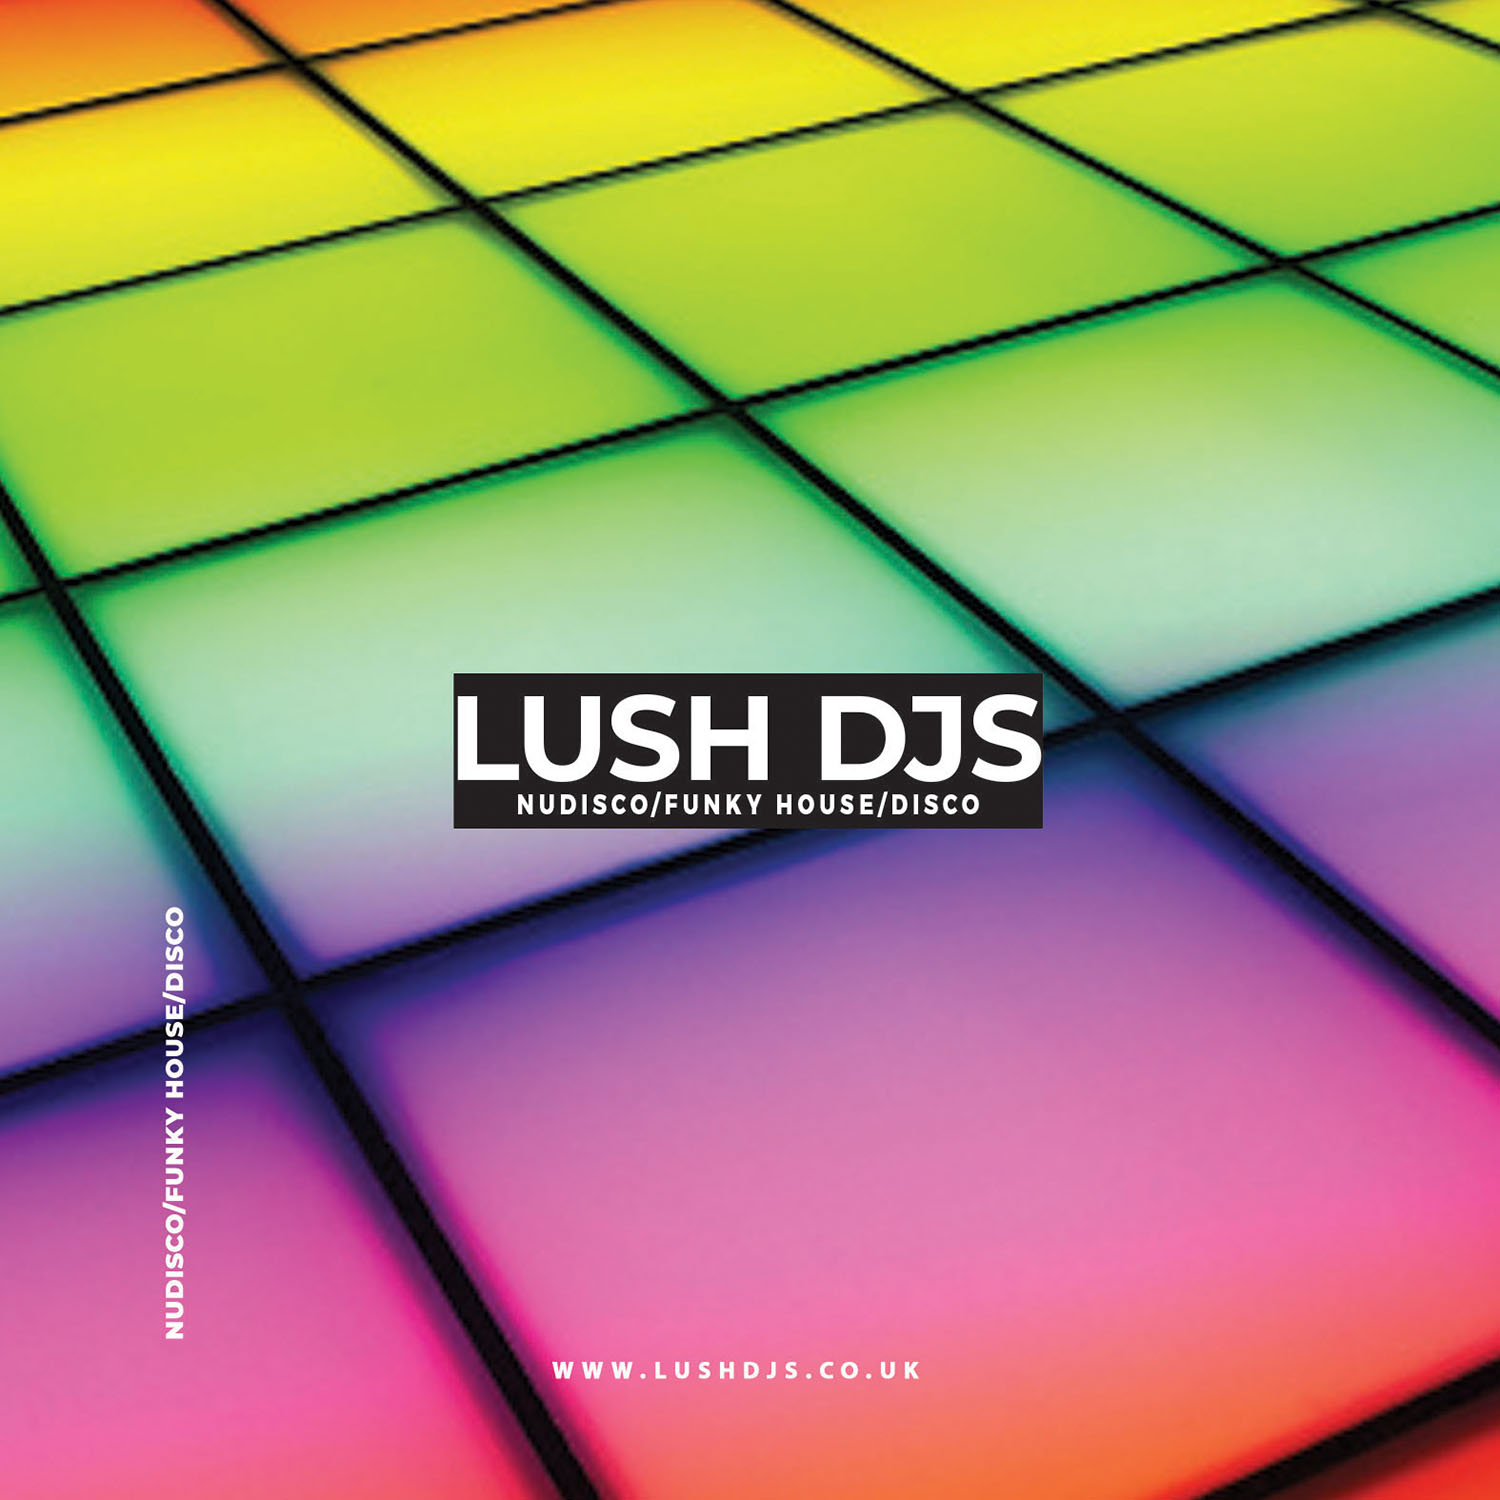 Artwork for Lush DJs - NuDisco/Funky House/Disco